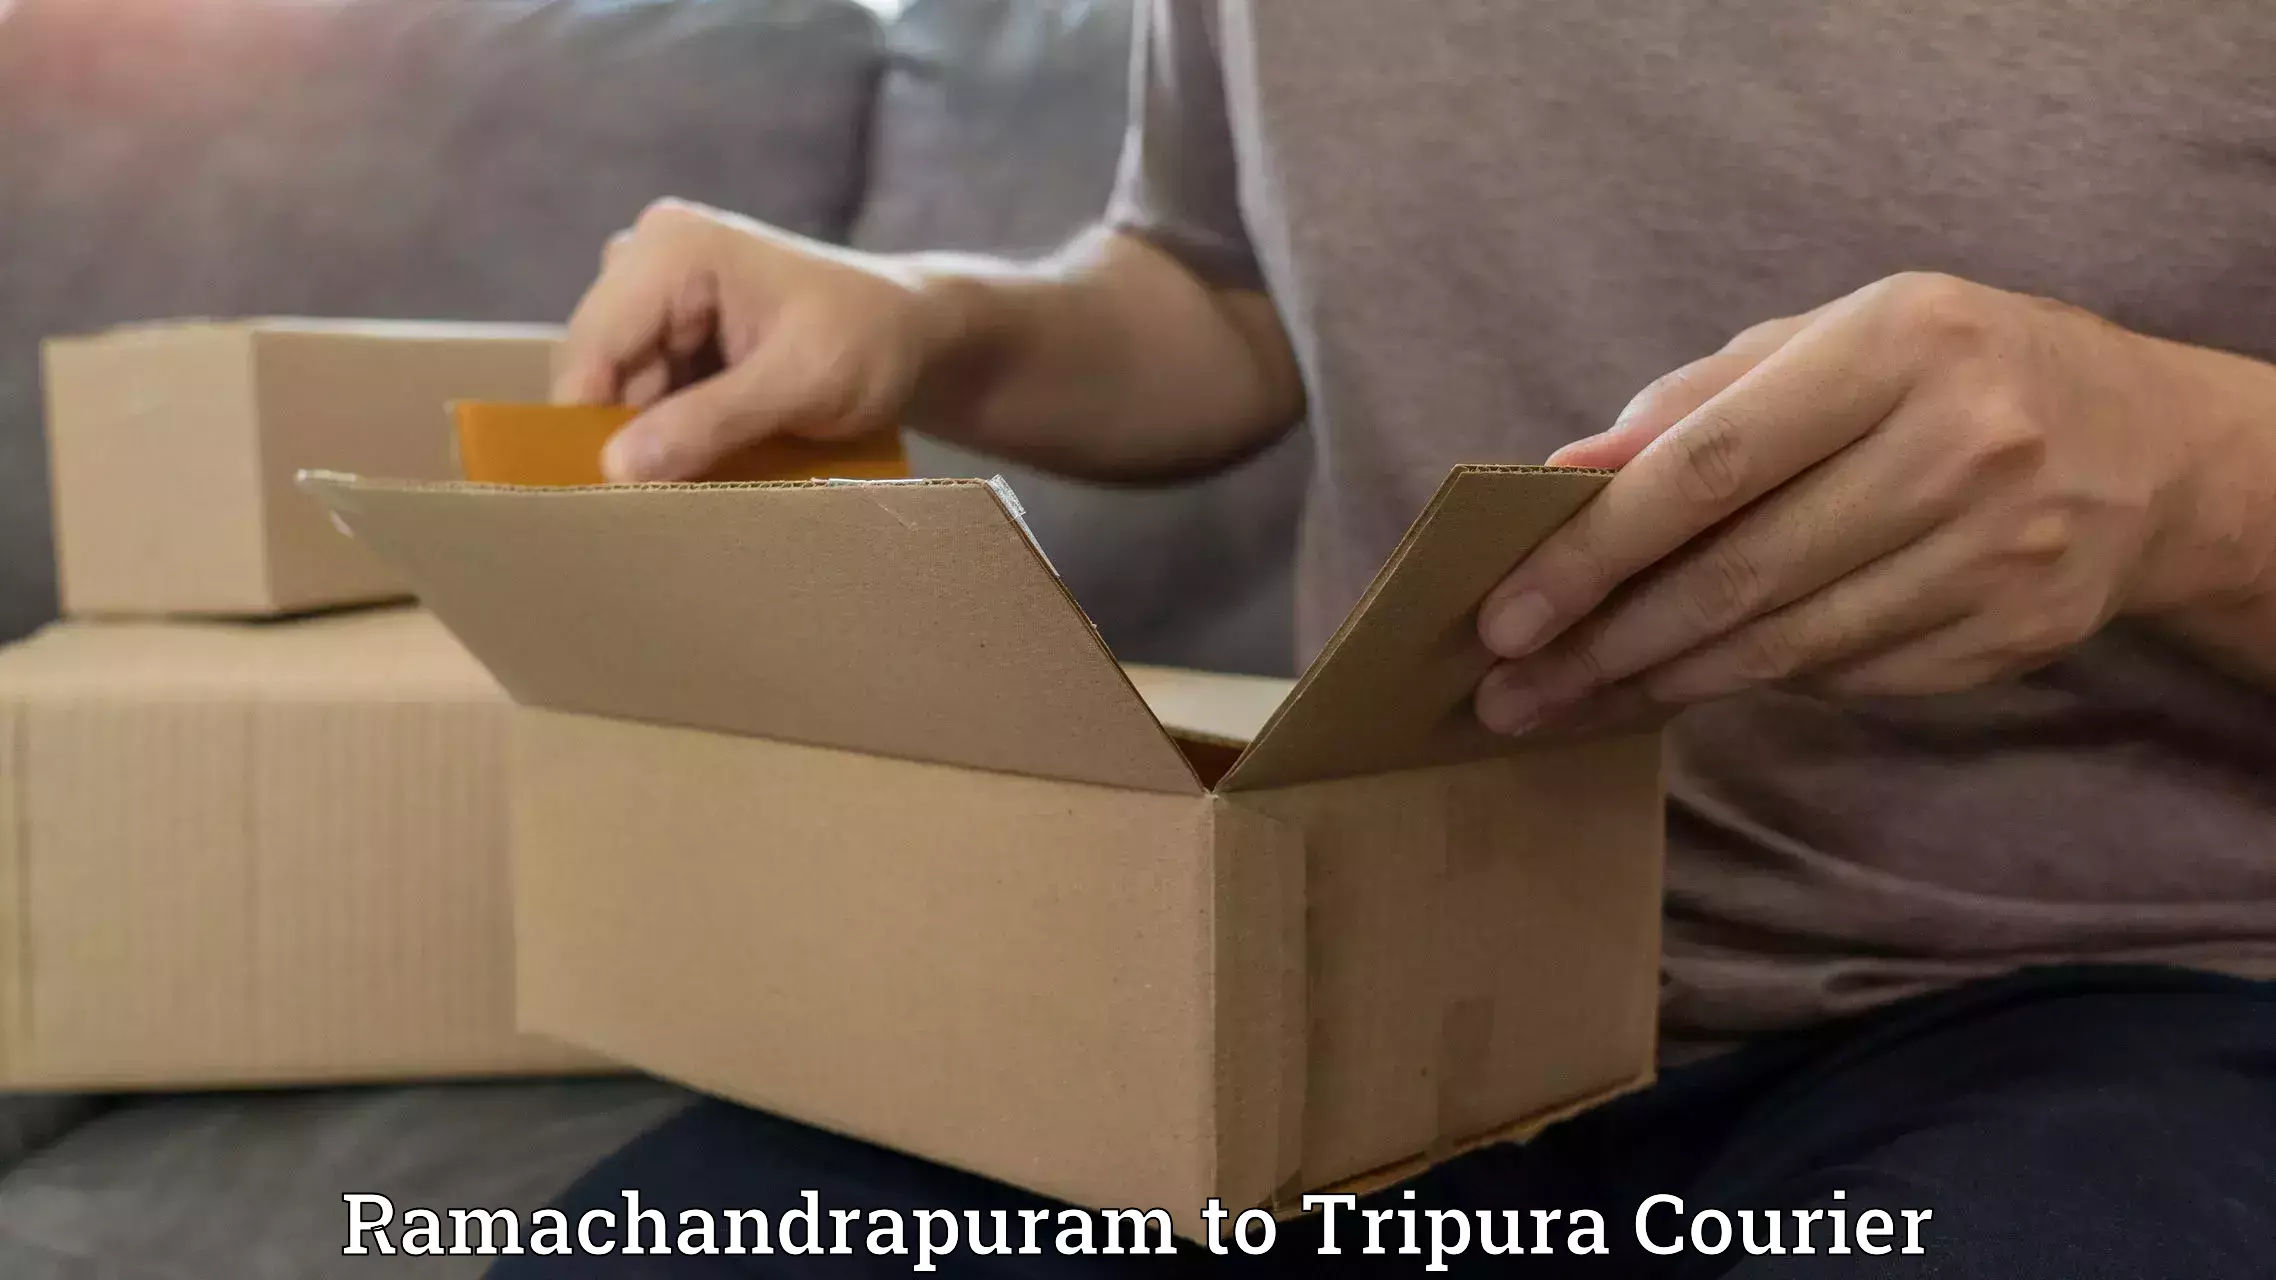 Global courier networks Ramachandrapuram to Udaipur Tripura